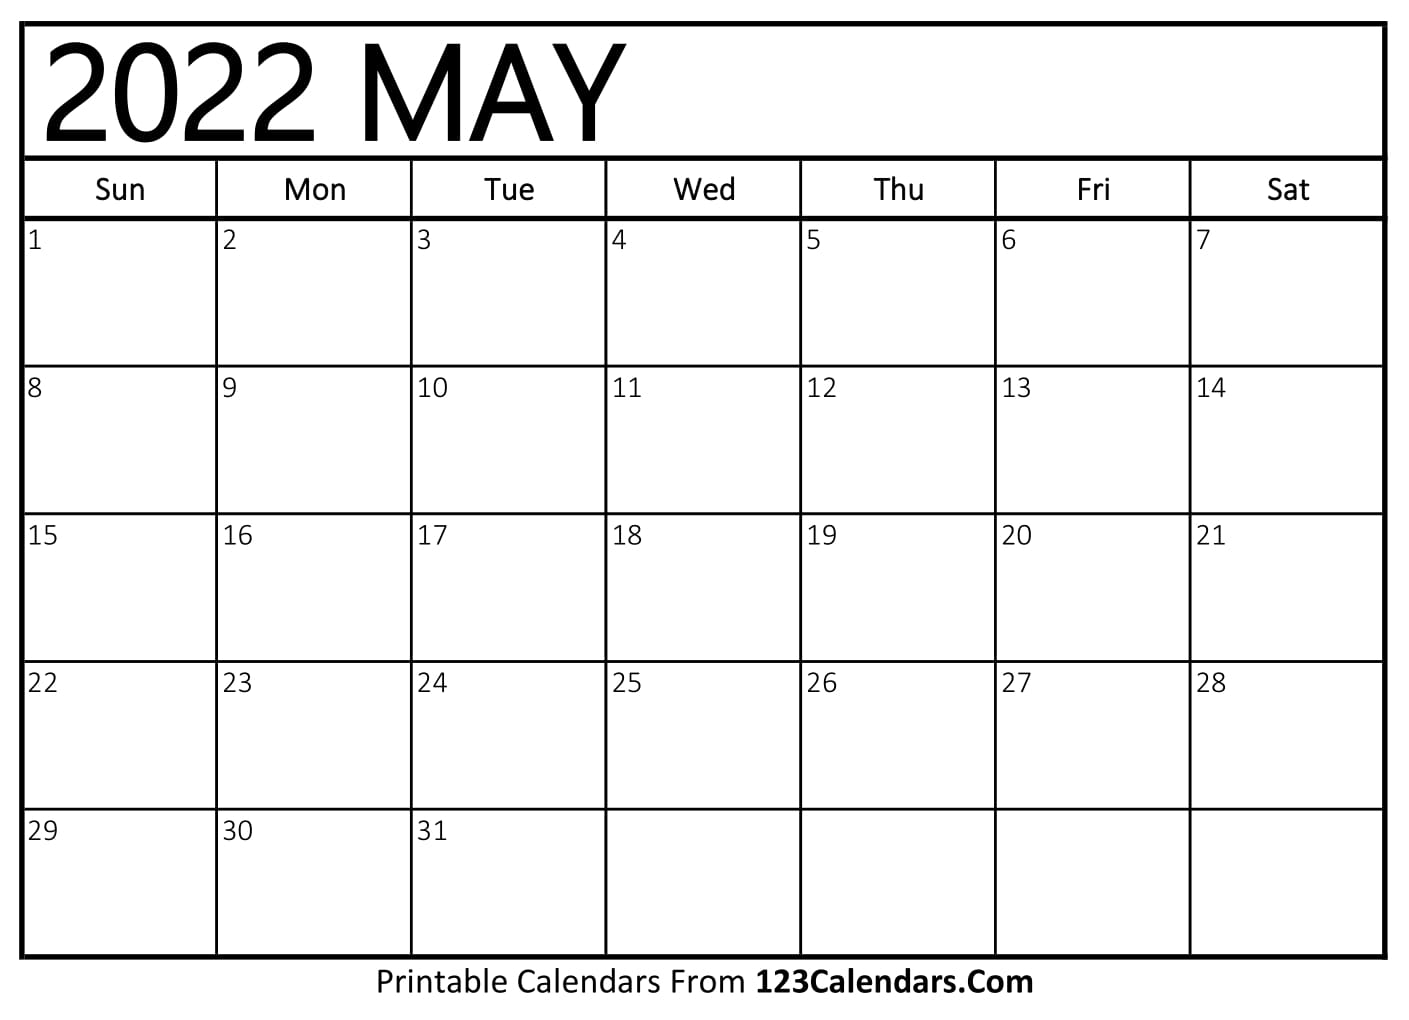 May Blank Calendar 2022 Printable May 2022 Calendar Templates - 123Calendars.com